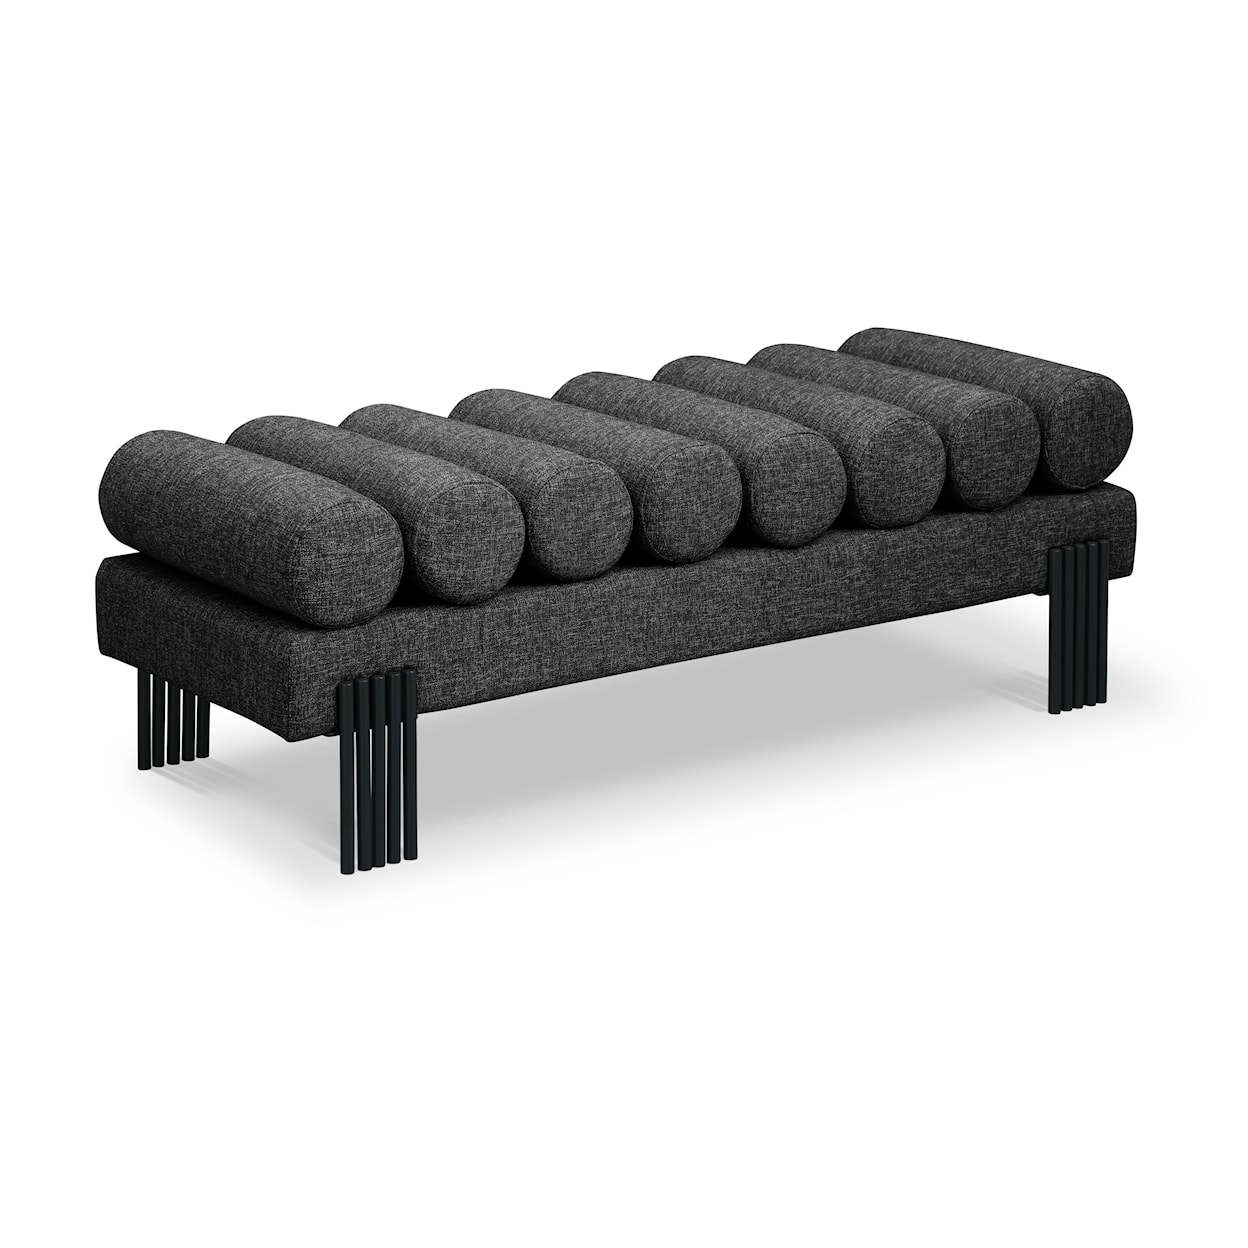 Meridian Furniture Akeela Accent Bench